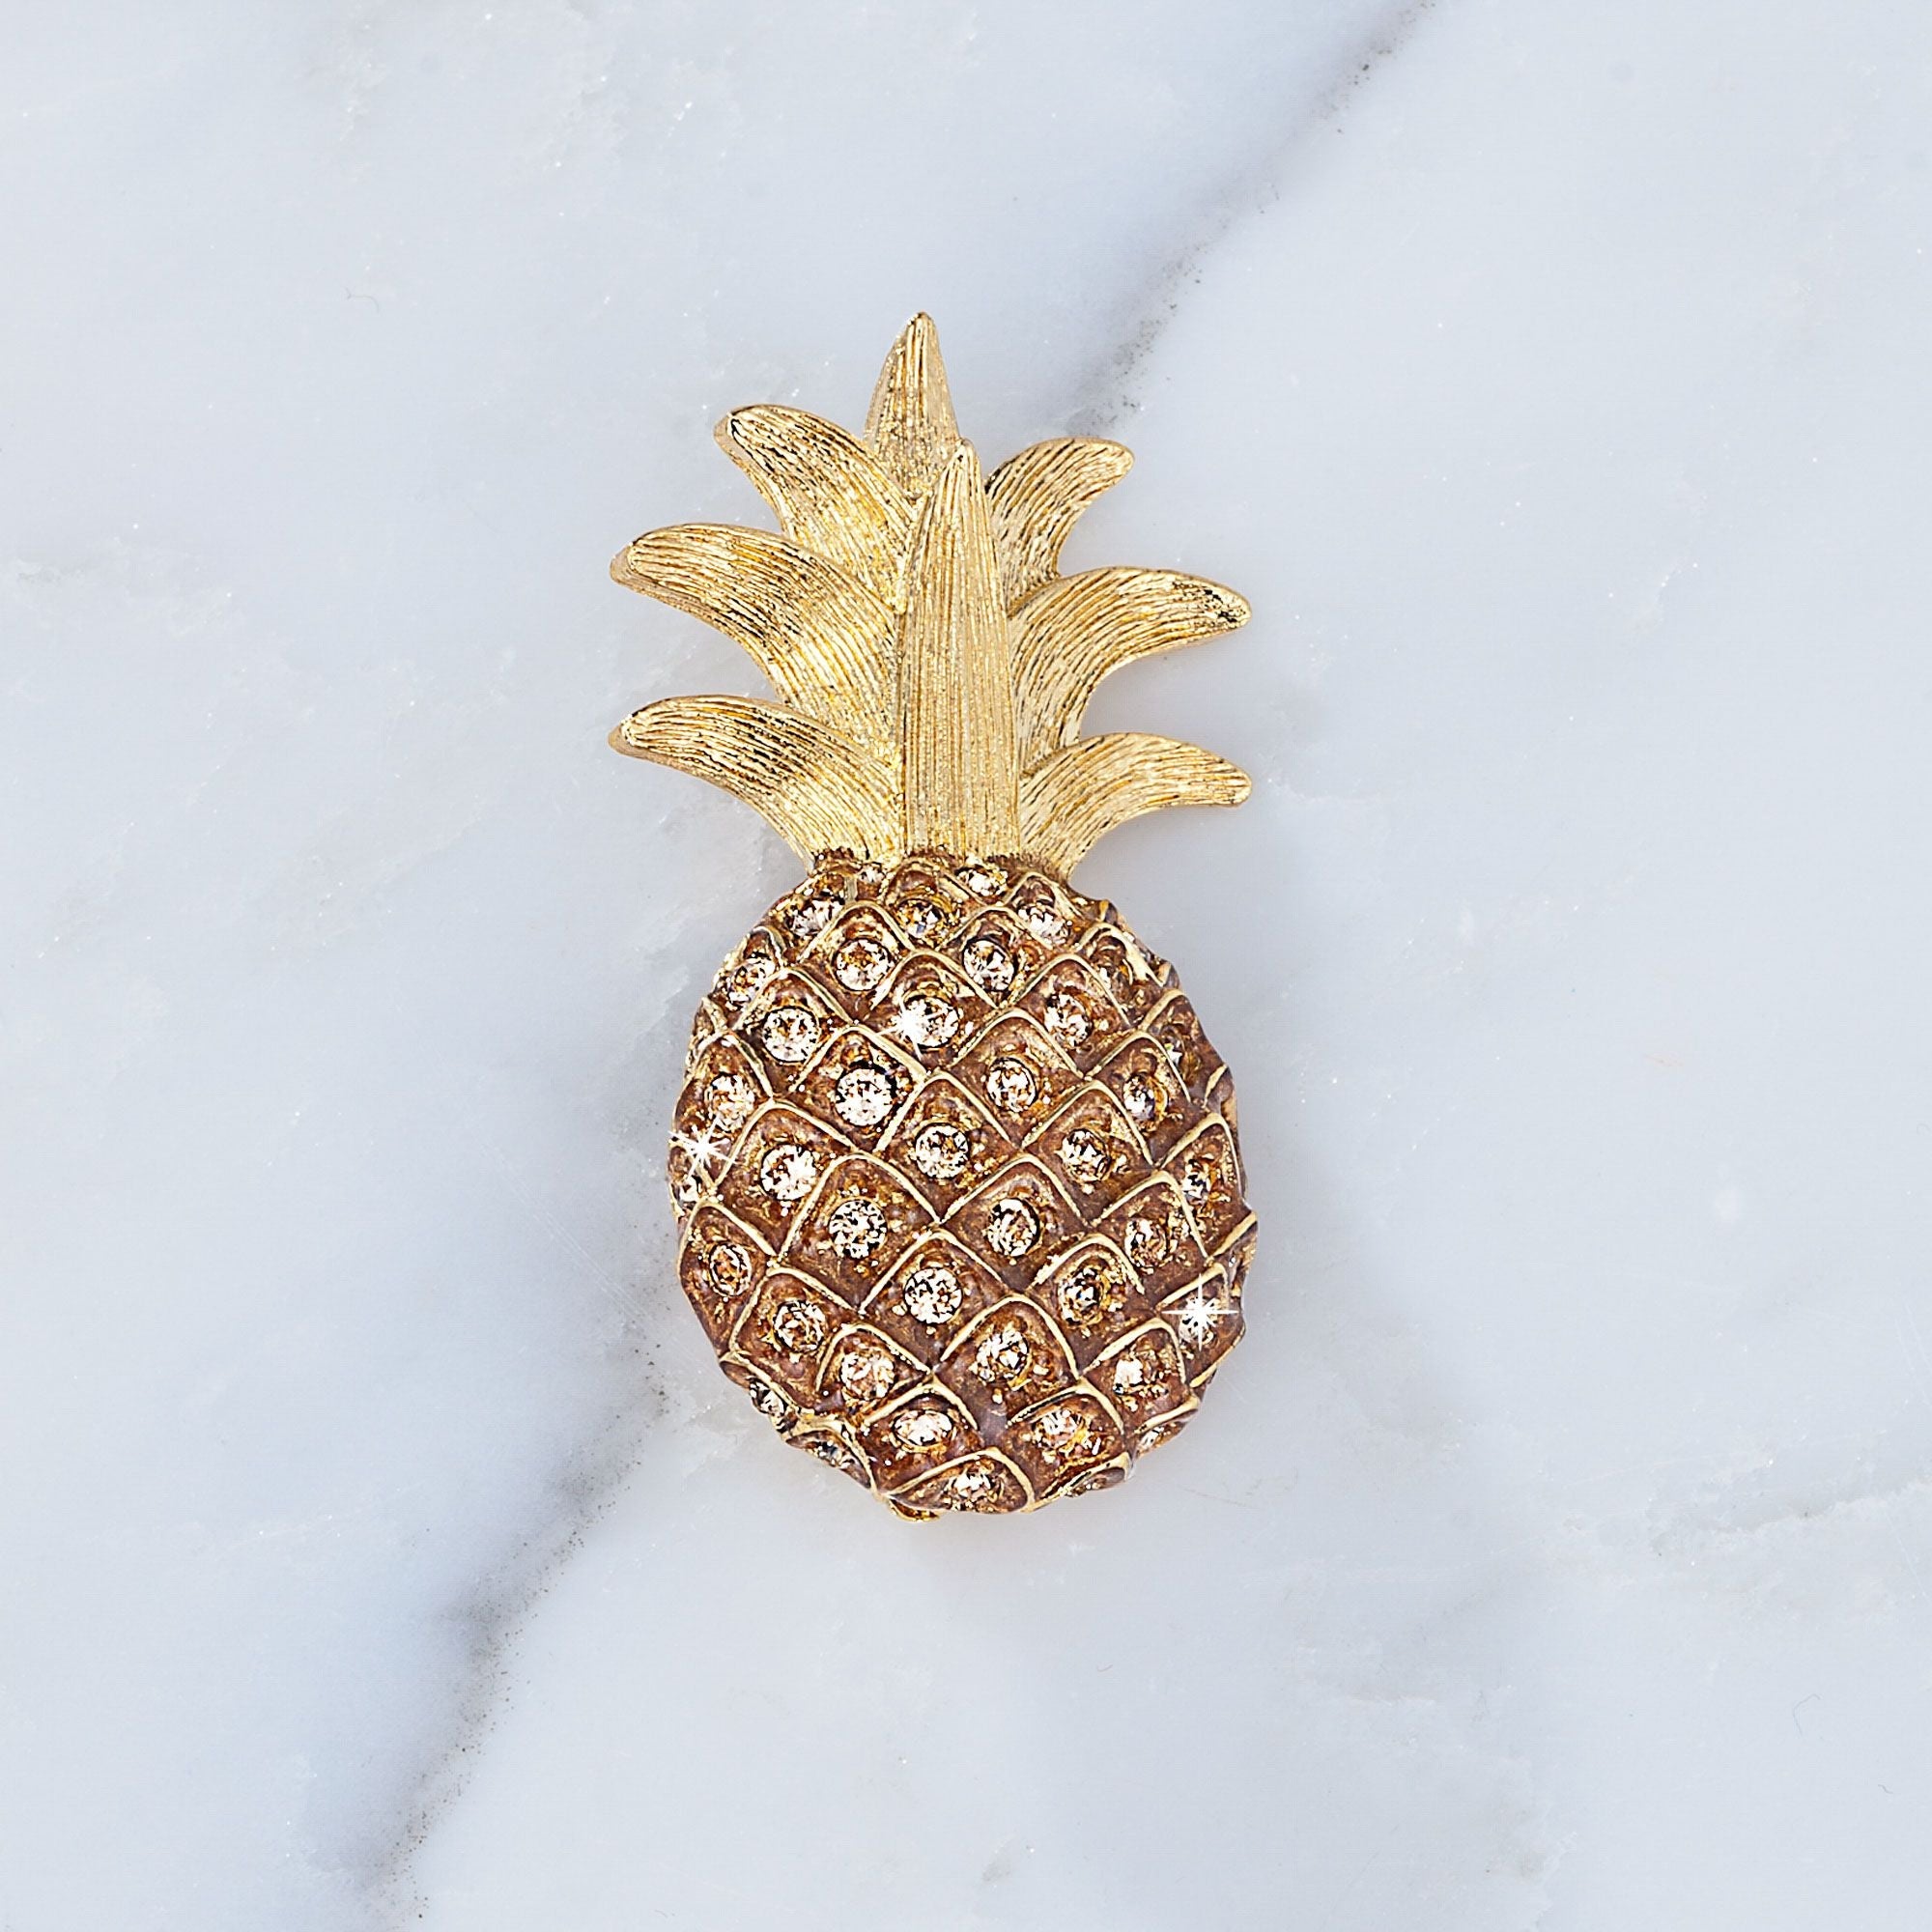 Swarovski Crystal Pineapple Brooch